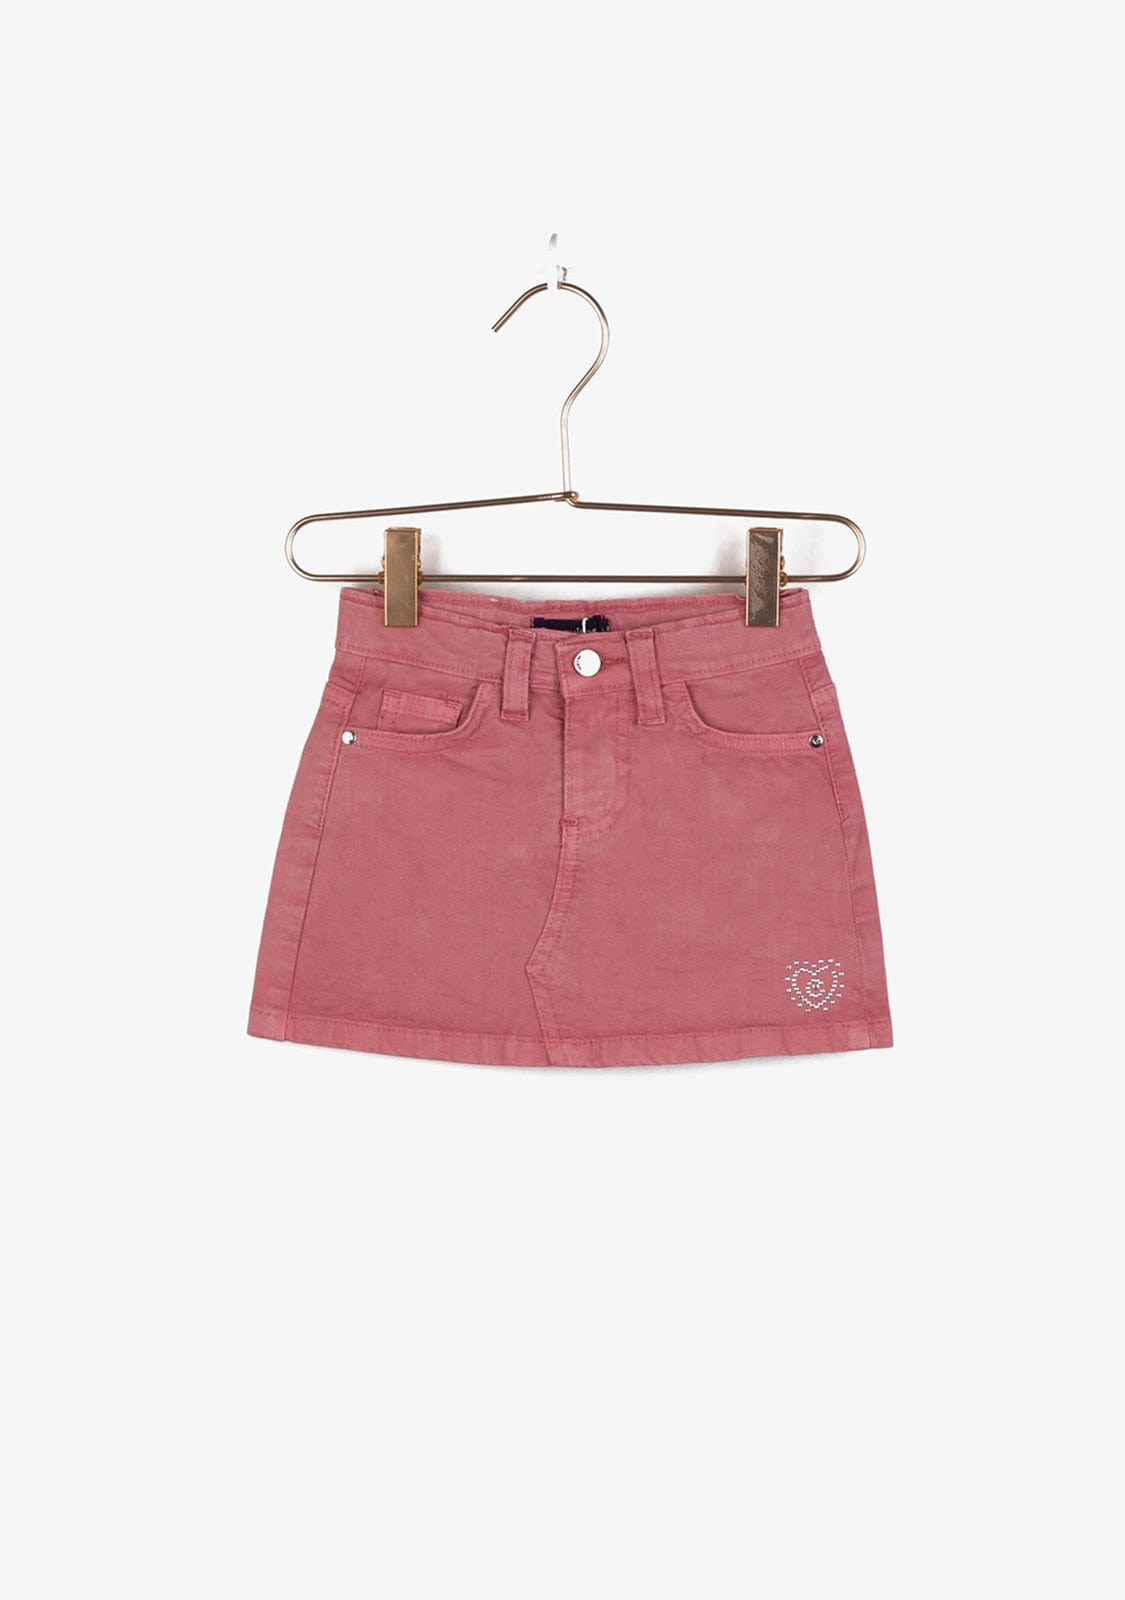 CONGUITOS TEXTIL Clothing Girl's Pink Mini Skirt